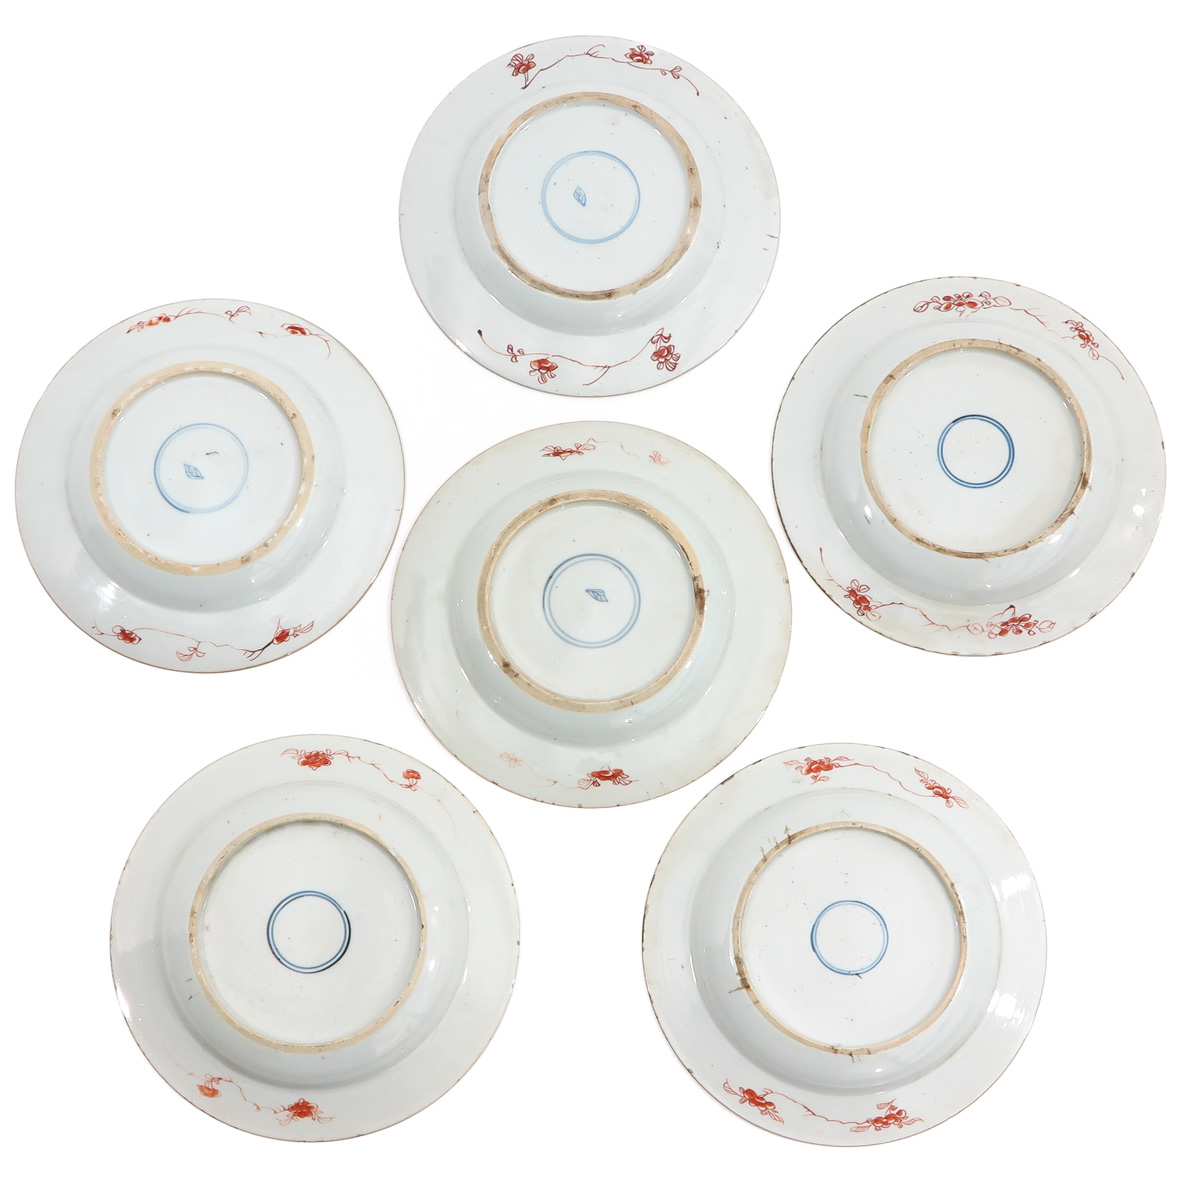 A Series of 6 Imari Plates - Image 2 of 10